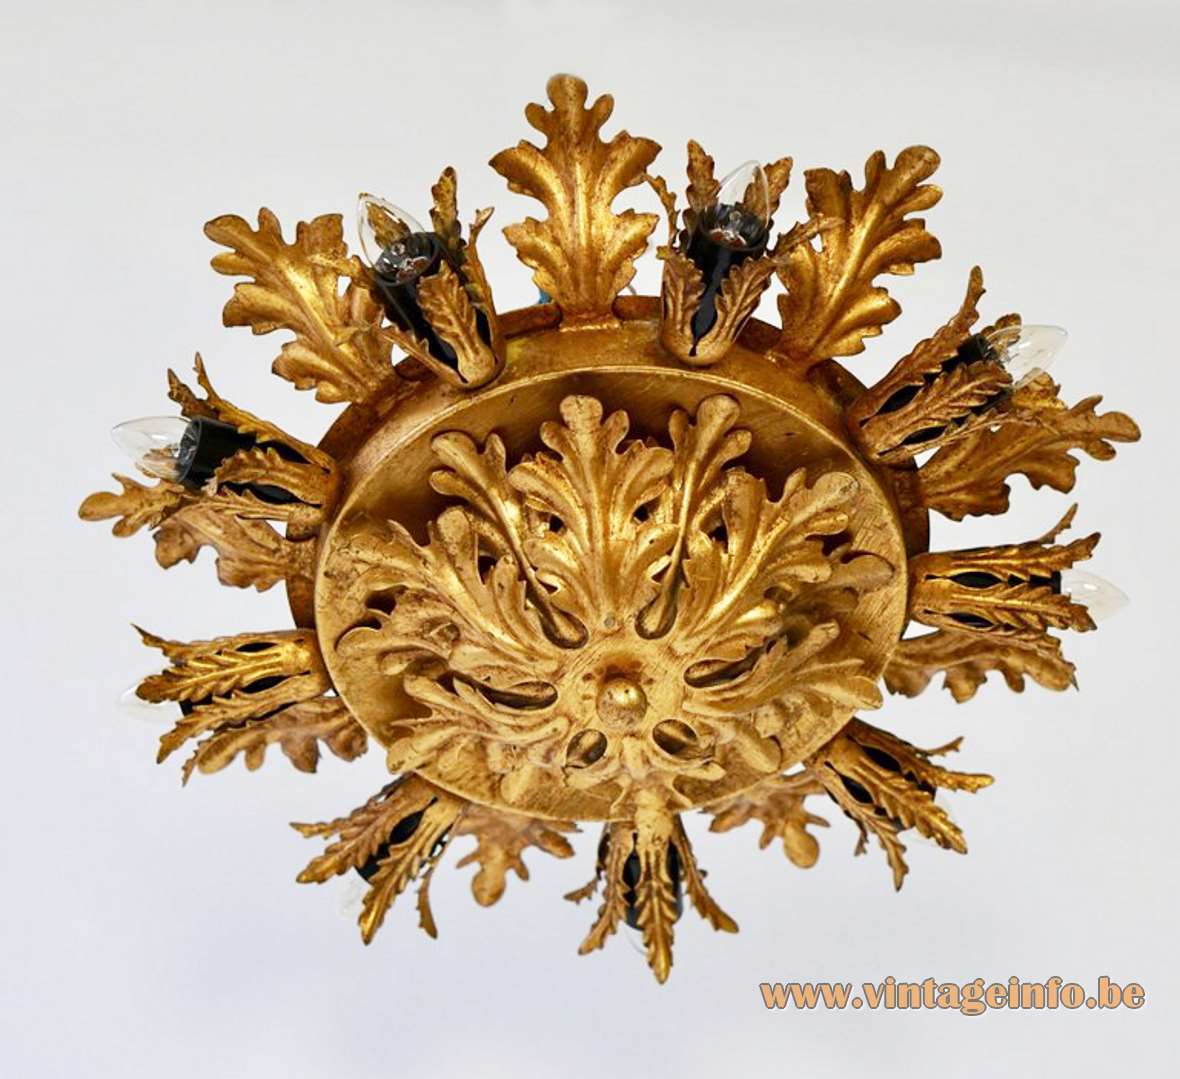 Banci Firenze sunburst flush mount round gold painted metal oak leaves & ferns 1970s 1980s Italy